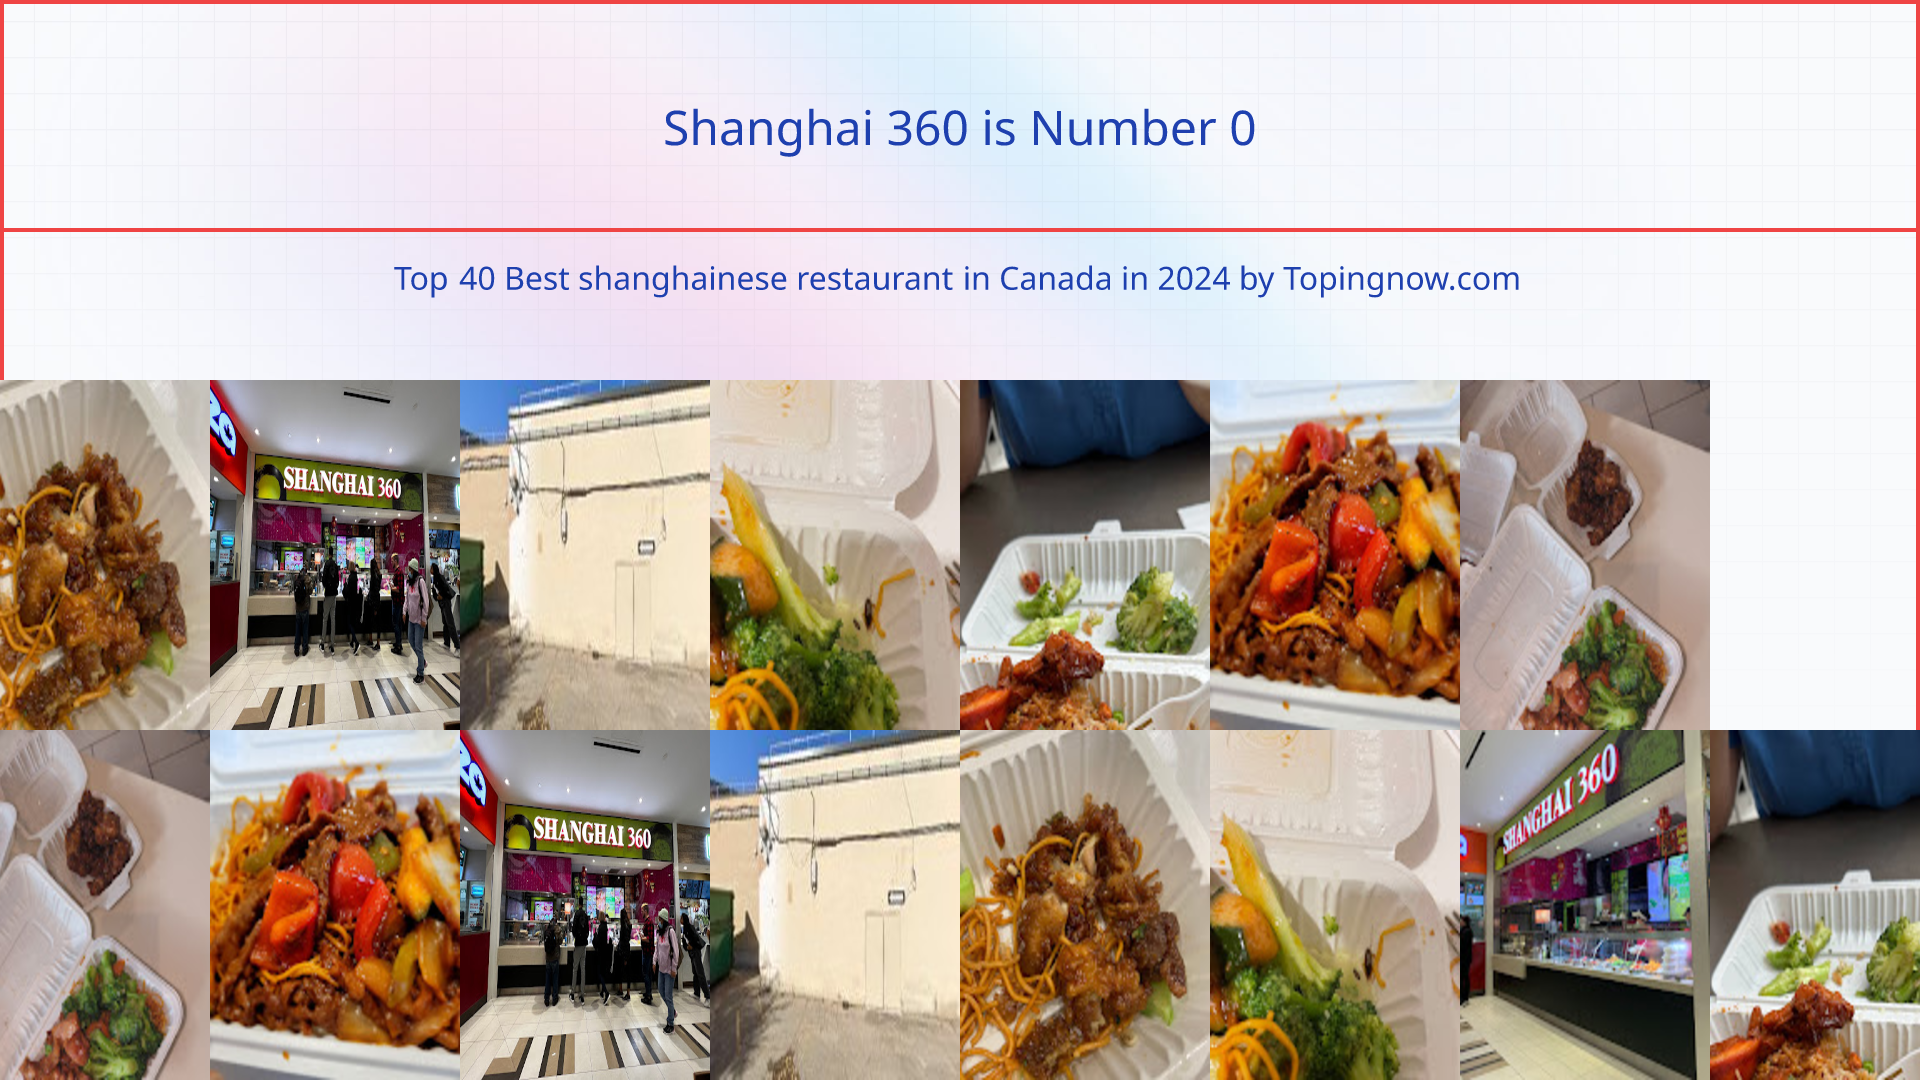 Shanghai 360: Top 40 Best shanghainese restaurant in Canada in 2024